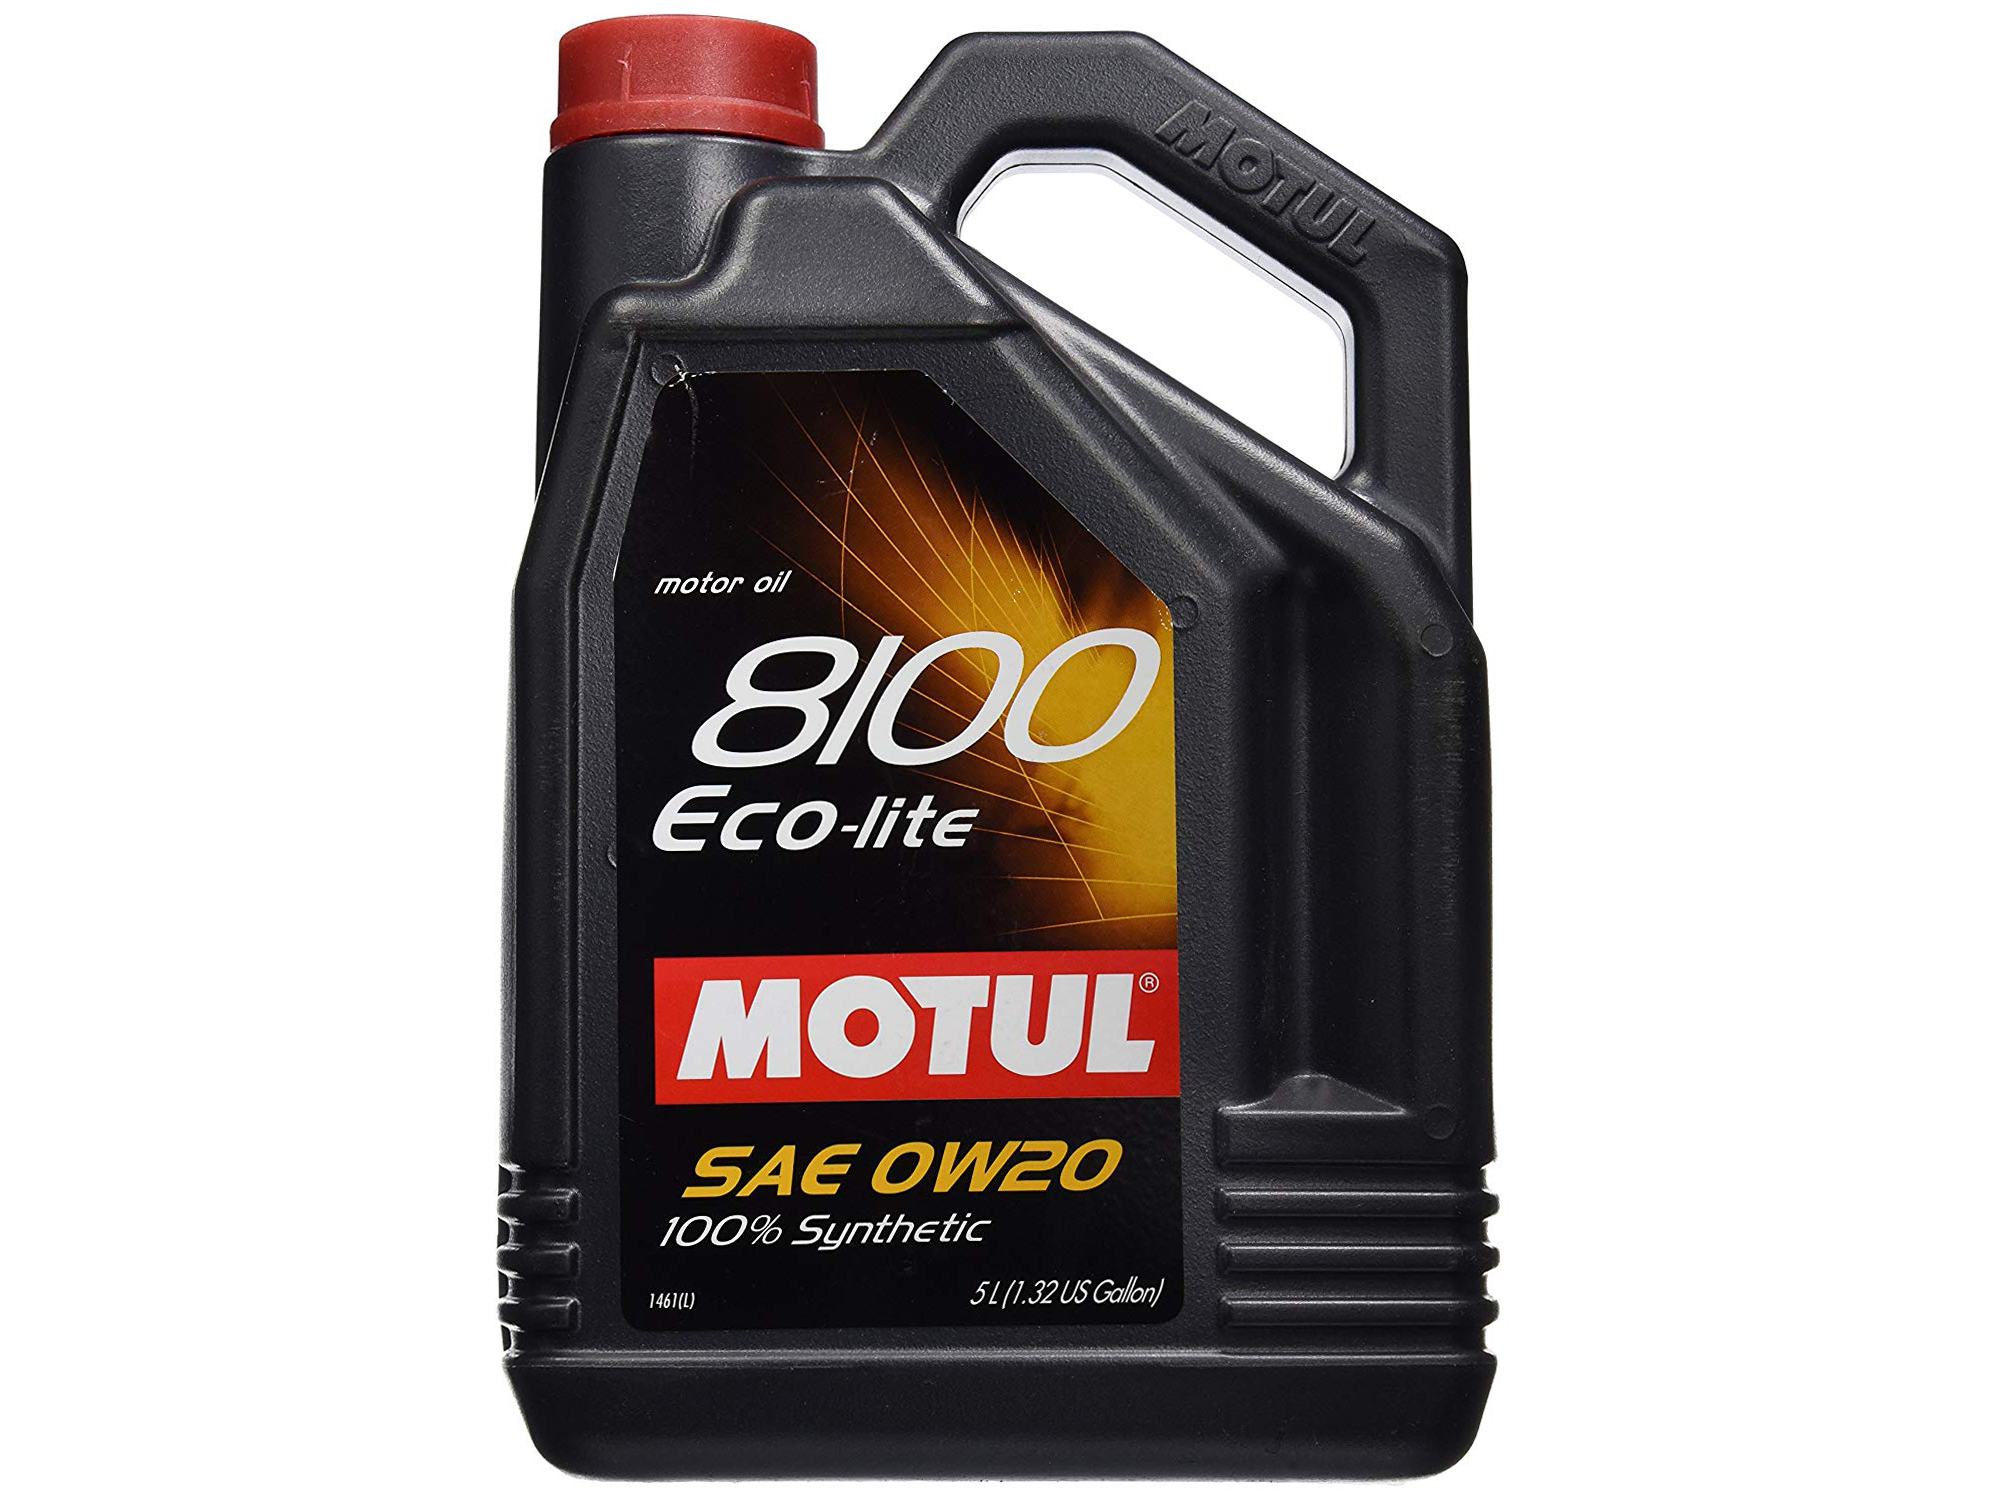 Мотюль масло 5 литров. Motul Eco Lite 0w20. 8100 Eco-Lite 0w-20. Motul 8100 Eco-Lite 0w20 1l. Motul 8100 Eco-Lite 0w-20 60л.